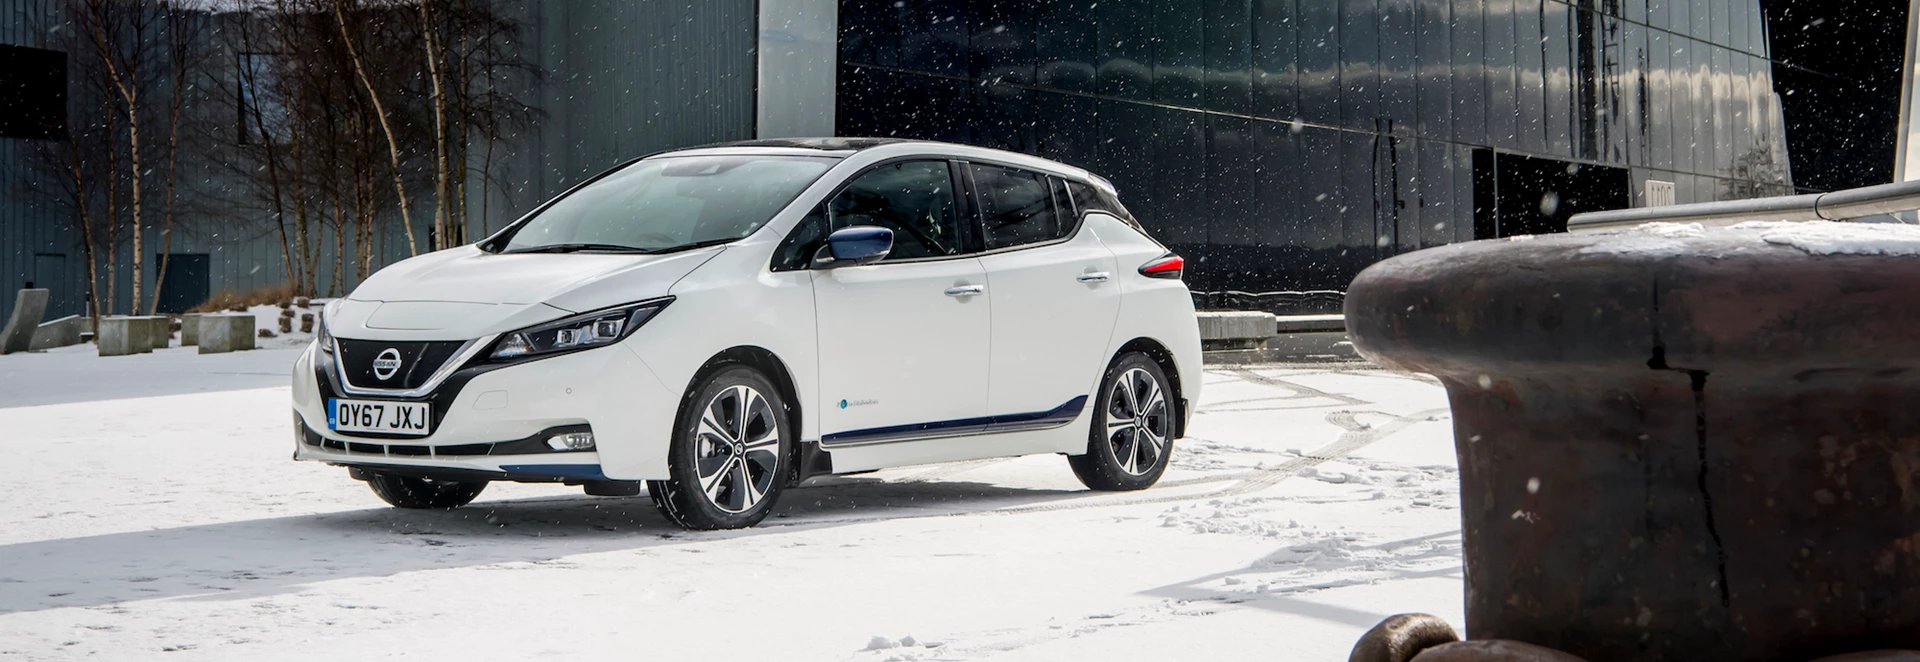 New Nissan Leaf is fastest-selling zero-emission vehicle